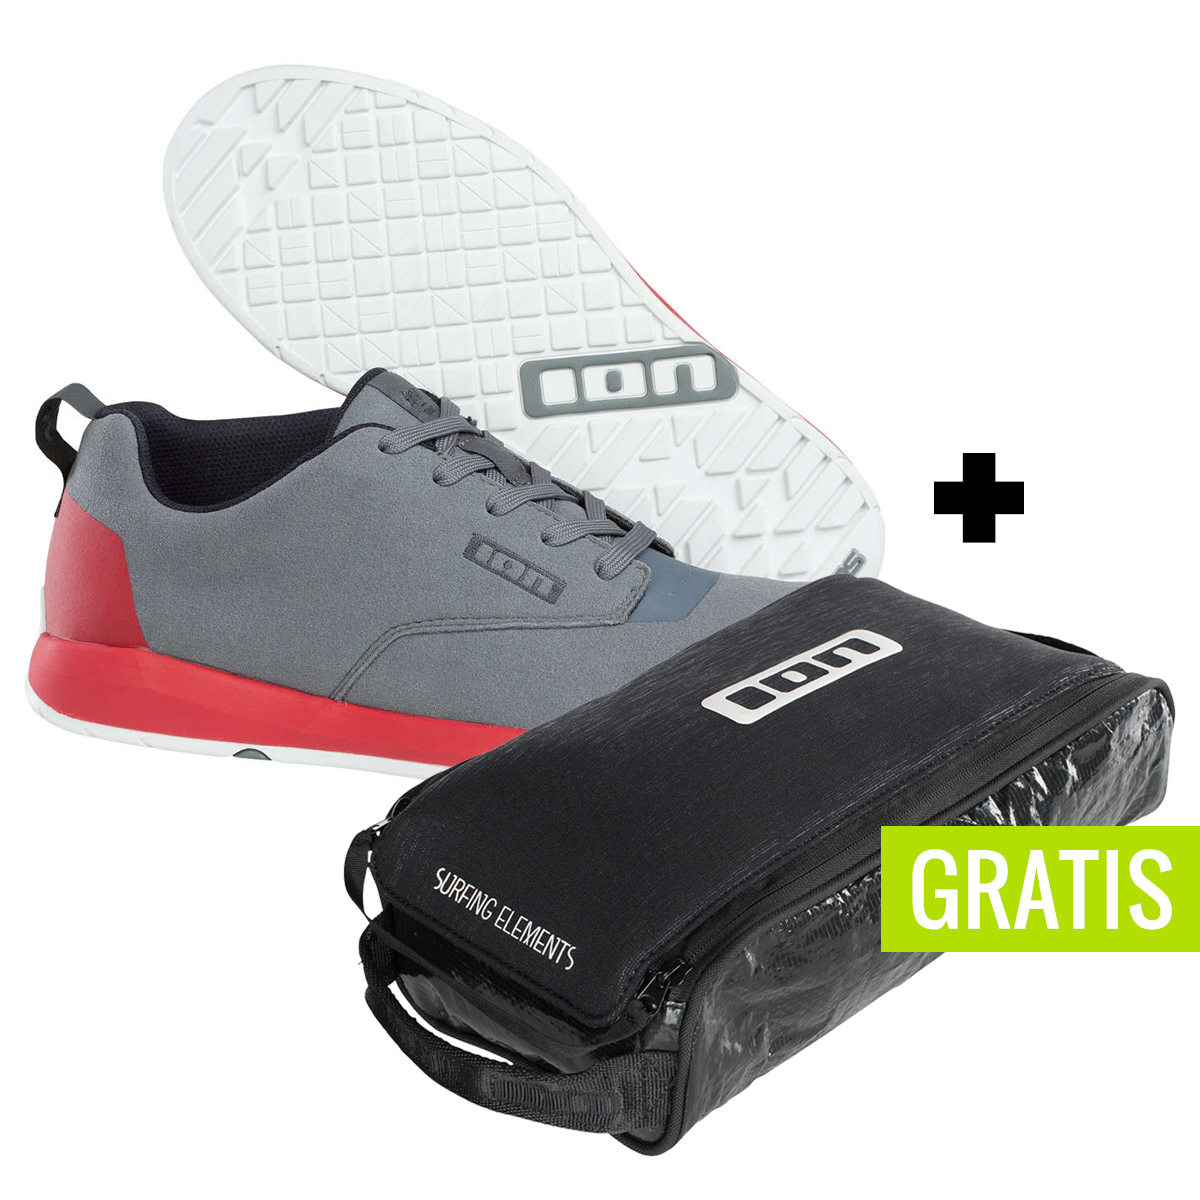 ION MTB Schuhe Raid Stone Grey + gratis Schuhtasche